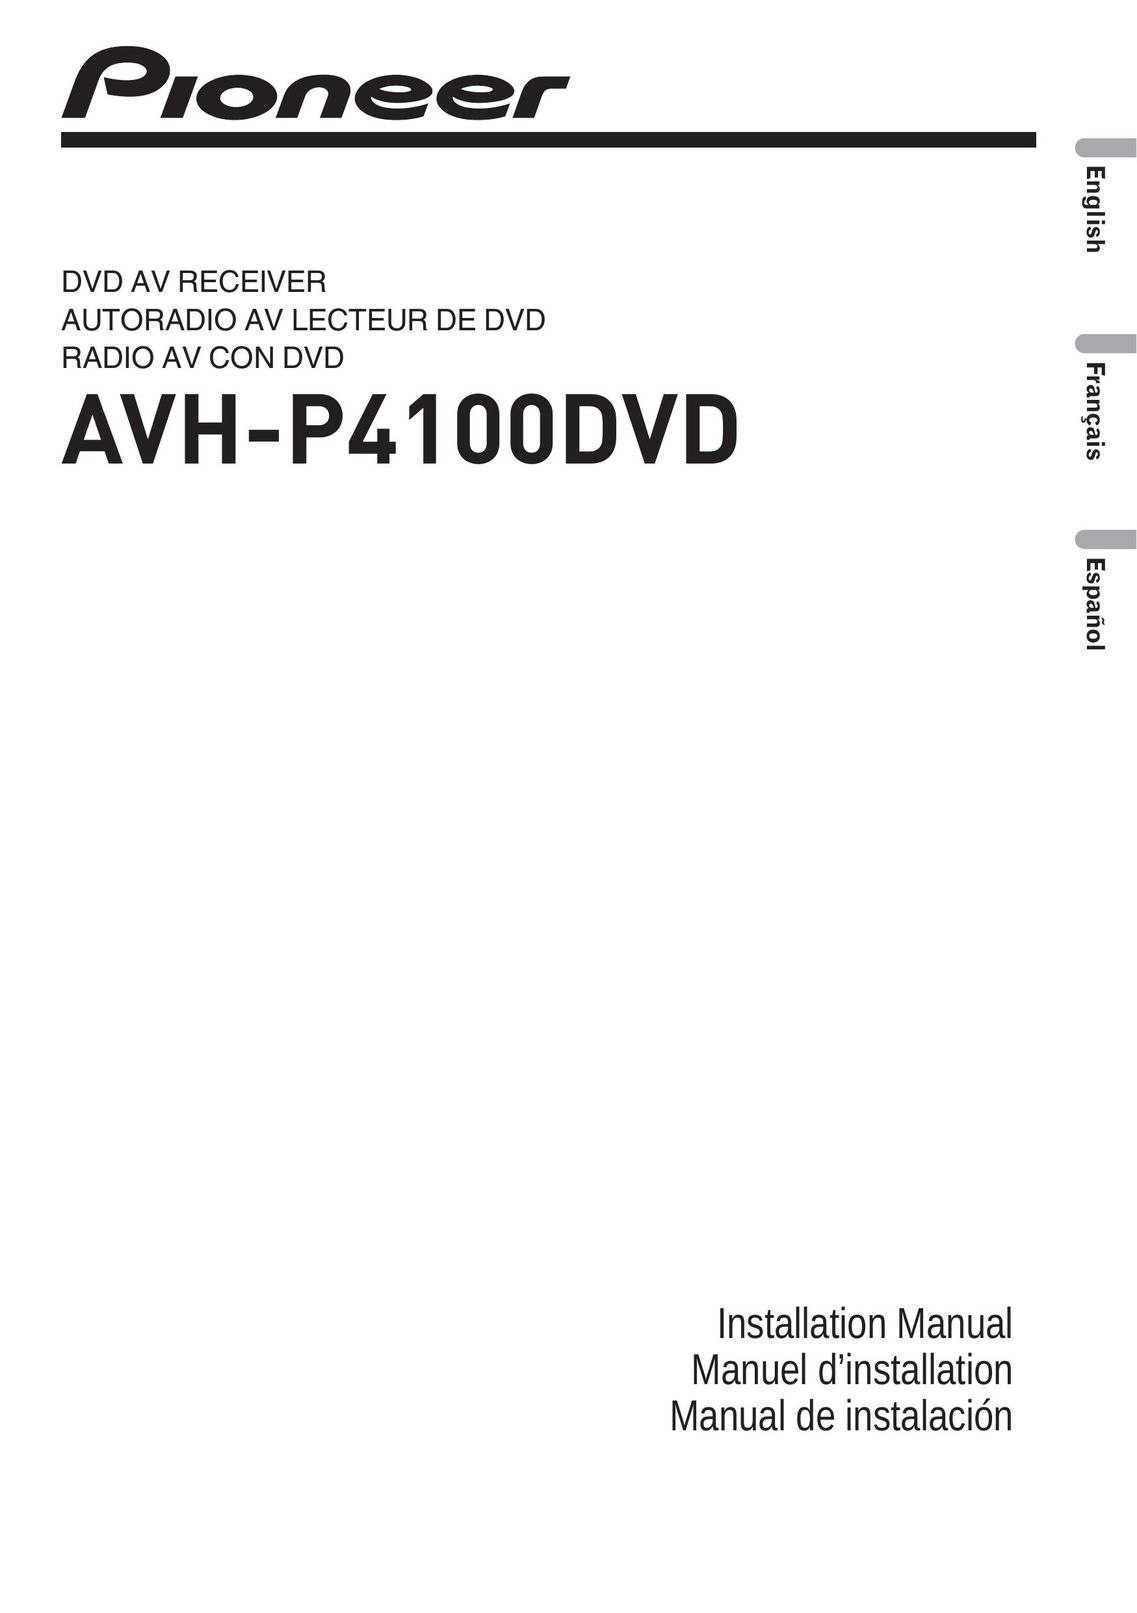 Pioneer AVH-P4100DVD Portable DVD Player User Manual